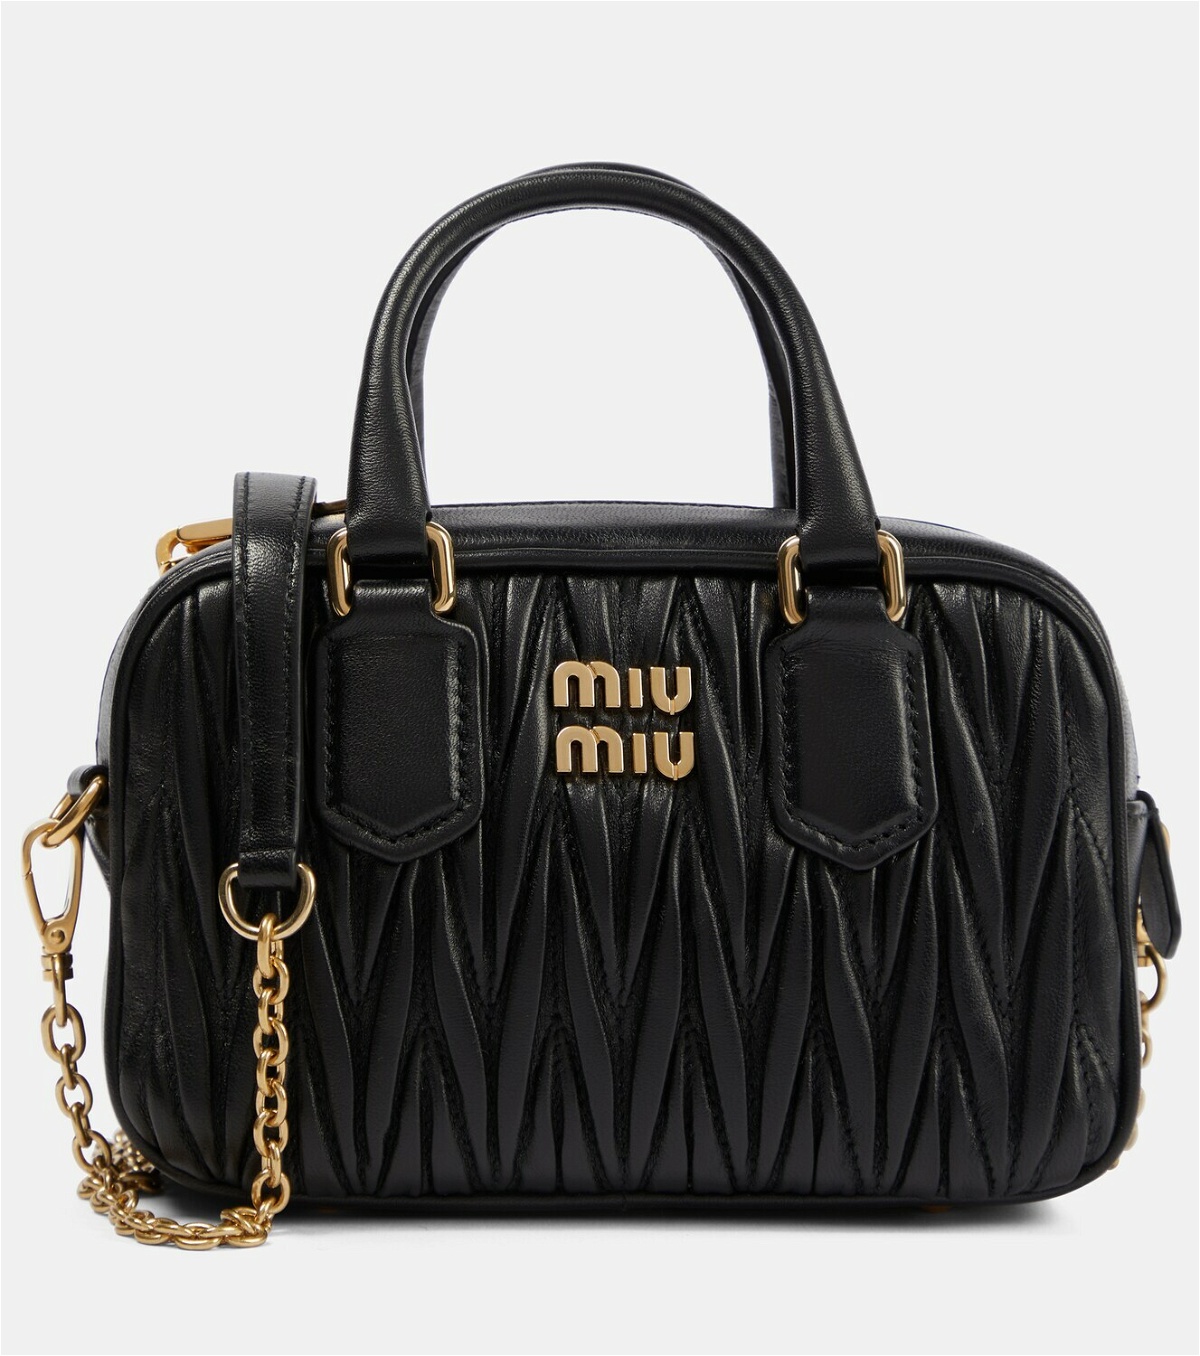 Bow bag leather handbag Miu Miu Pink in Leather - 36522946